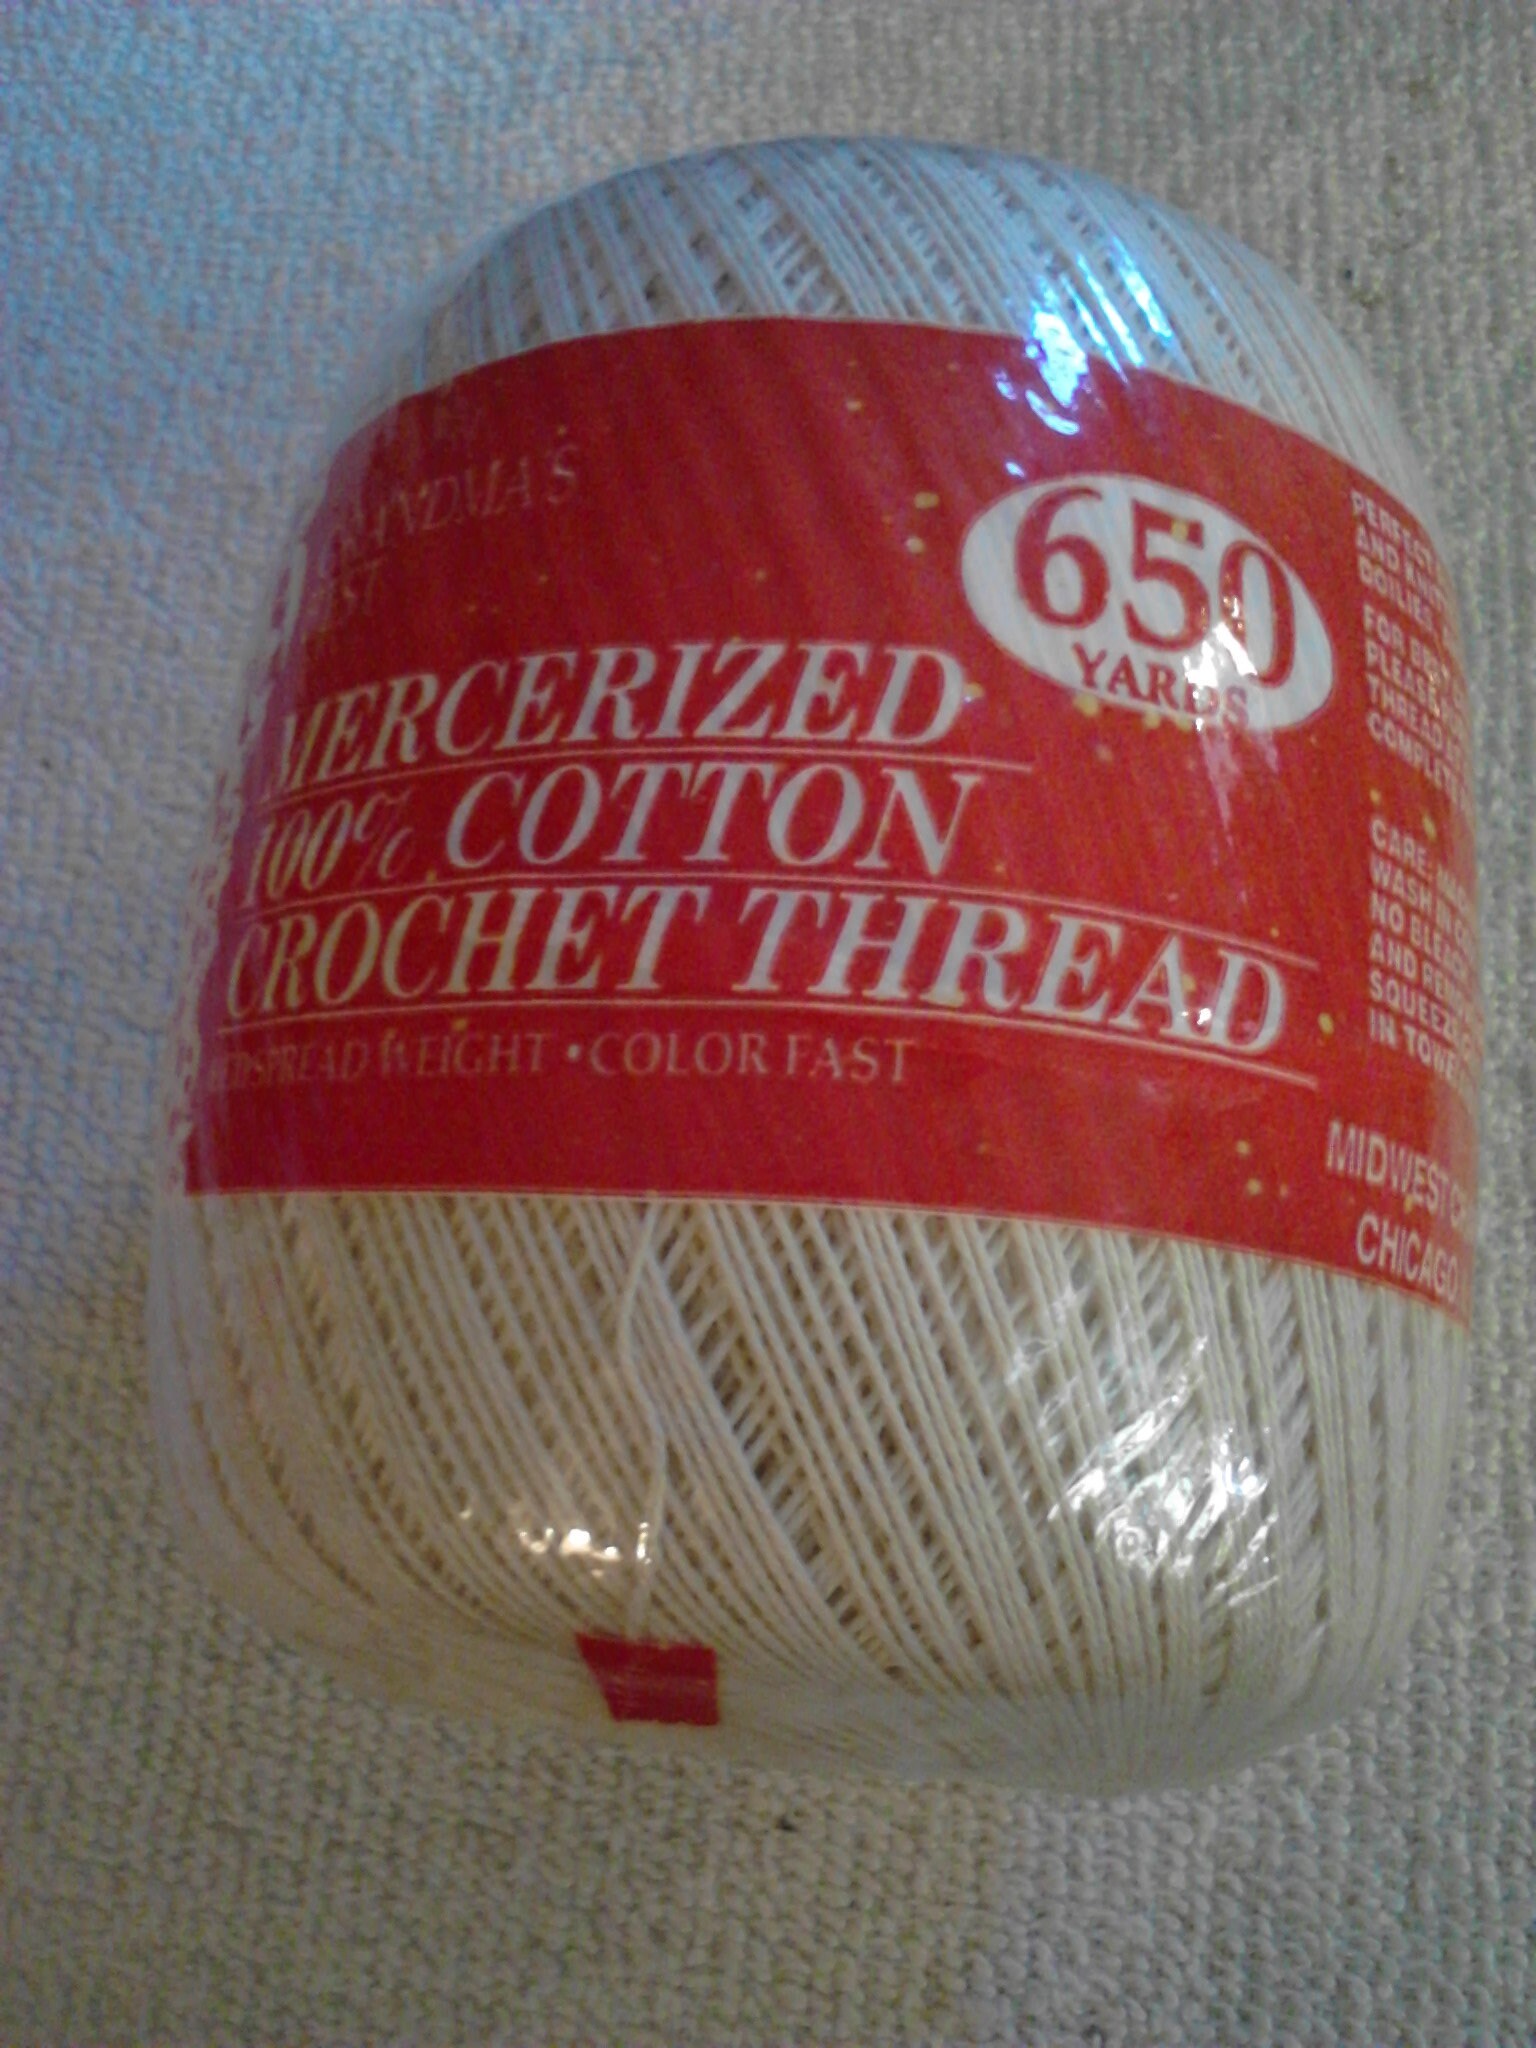 SINGER® Mercerized Cotton Thread - Black, 175 yd - Fred Meyer